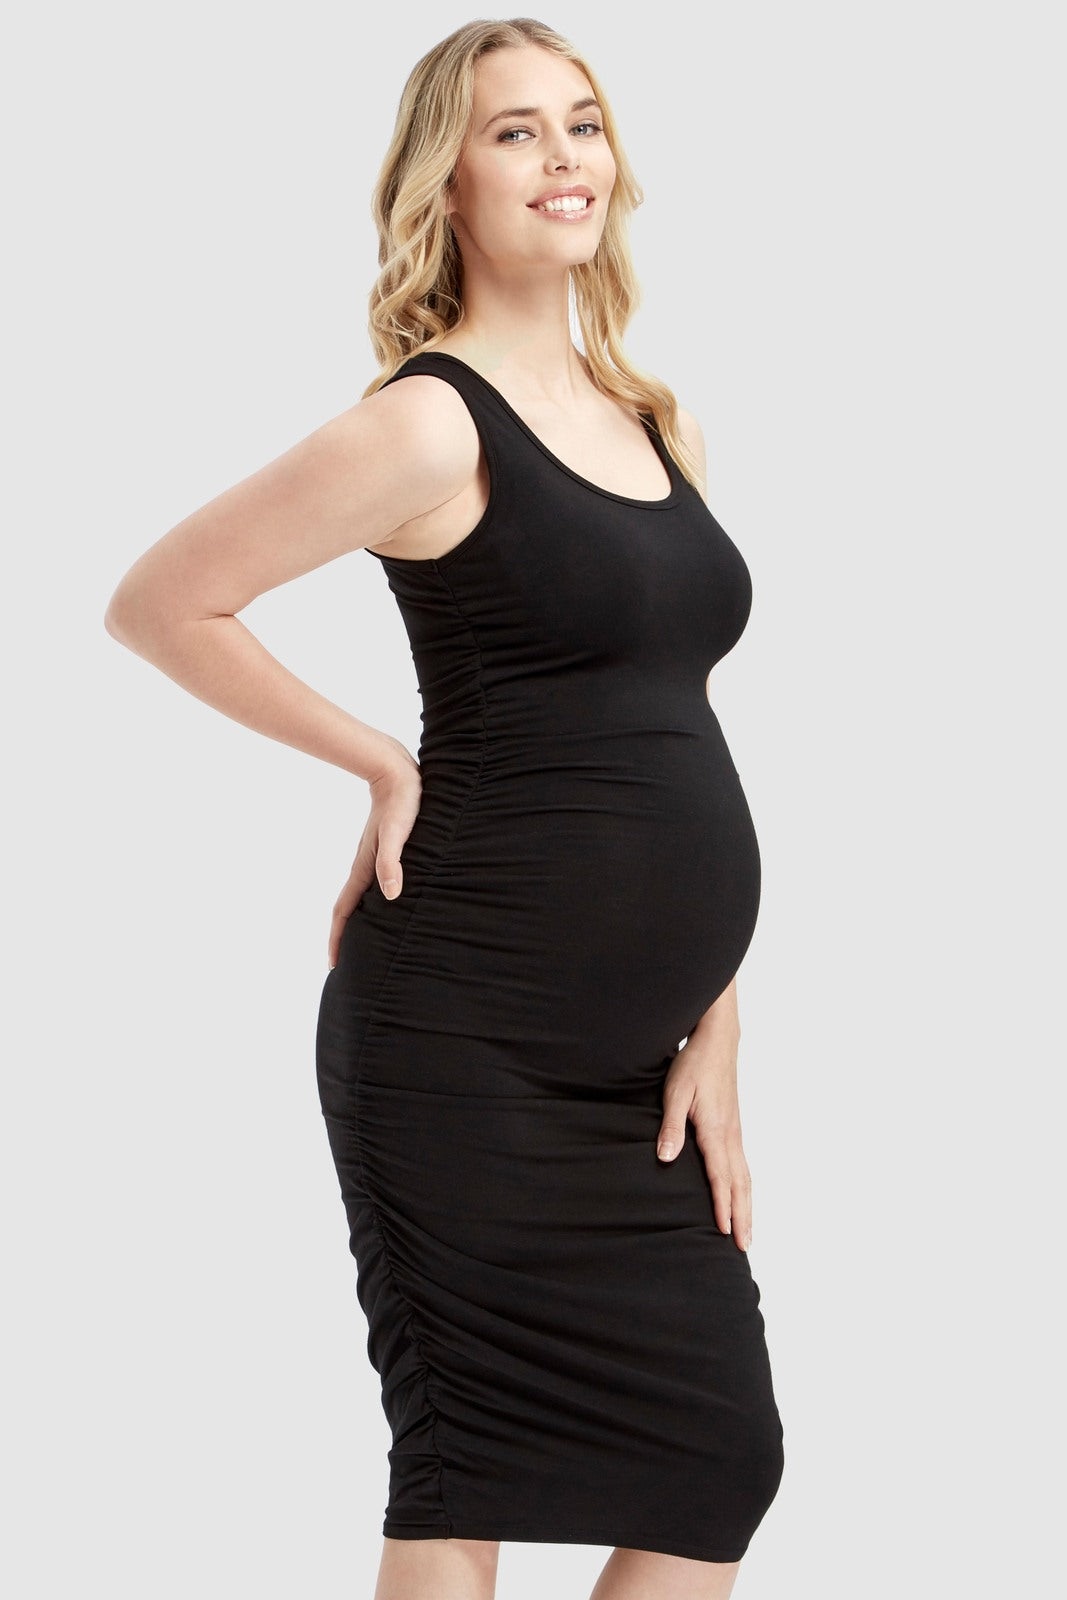 Organic Bamboo Ruched Tank Maternity Dress Dress from Bamboo Body maternity online store brisbane sydney perth australia